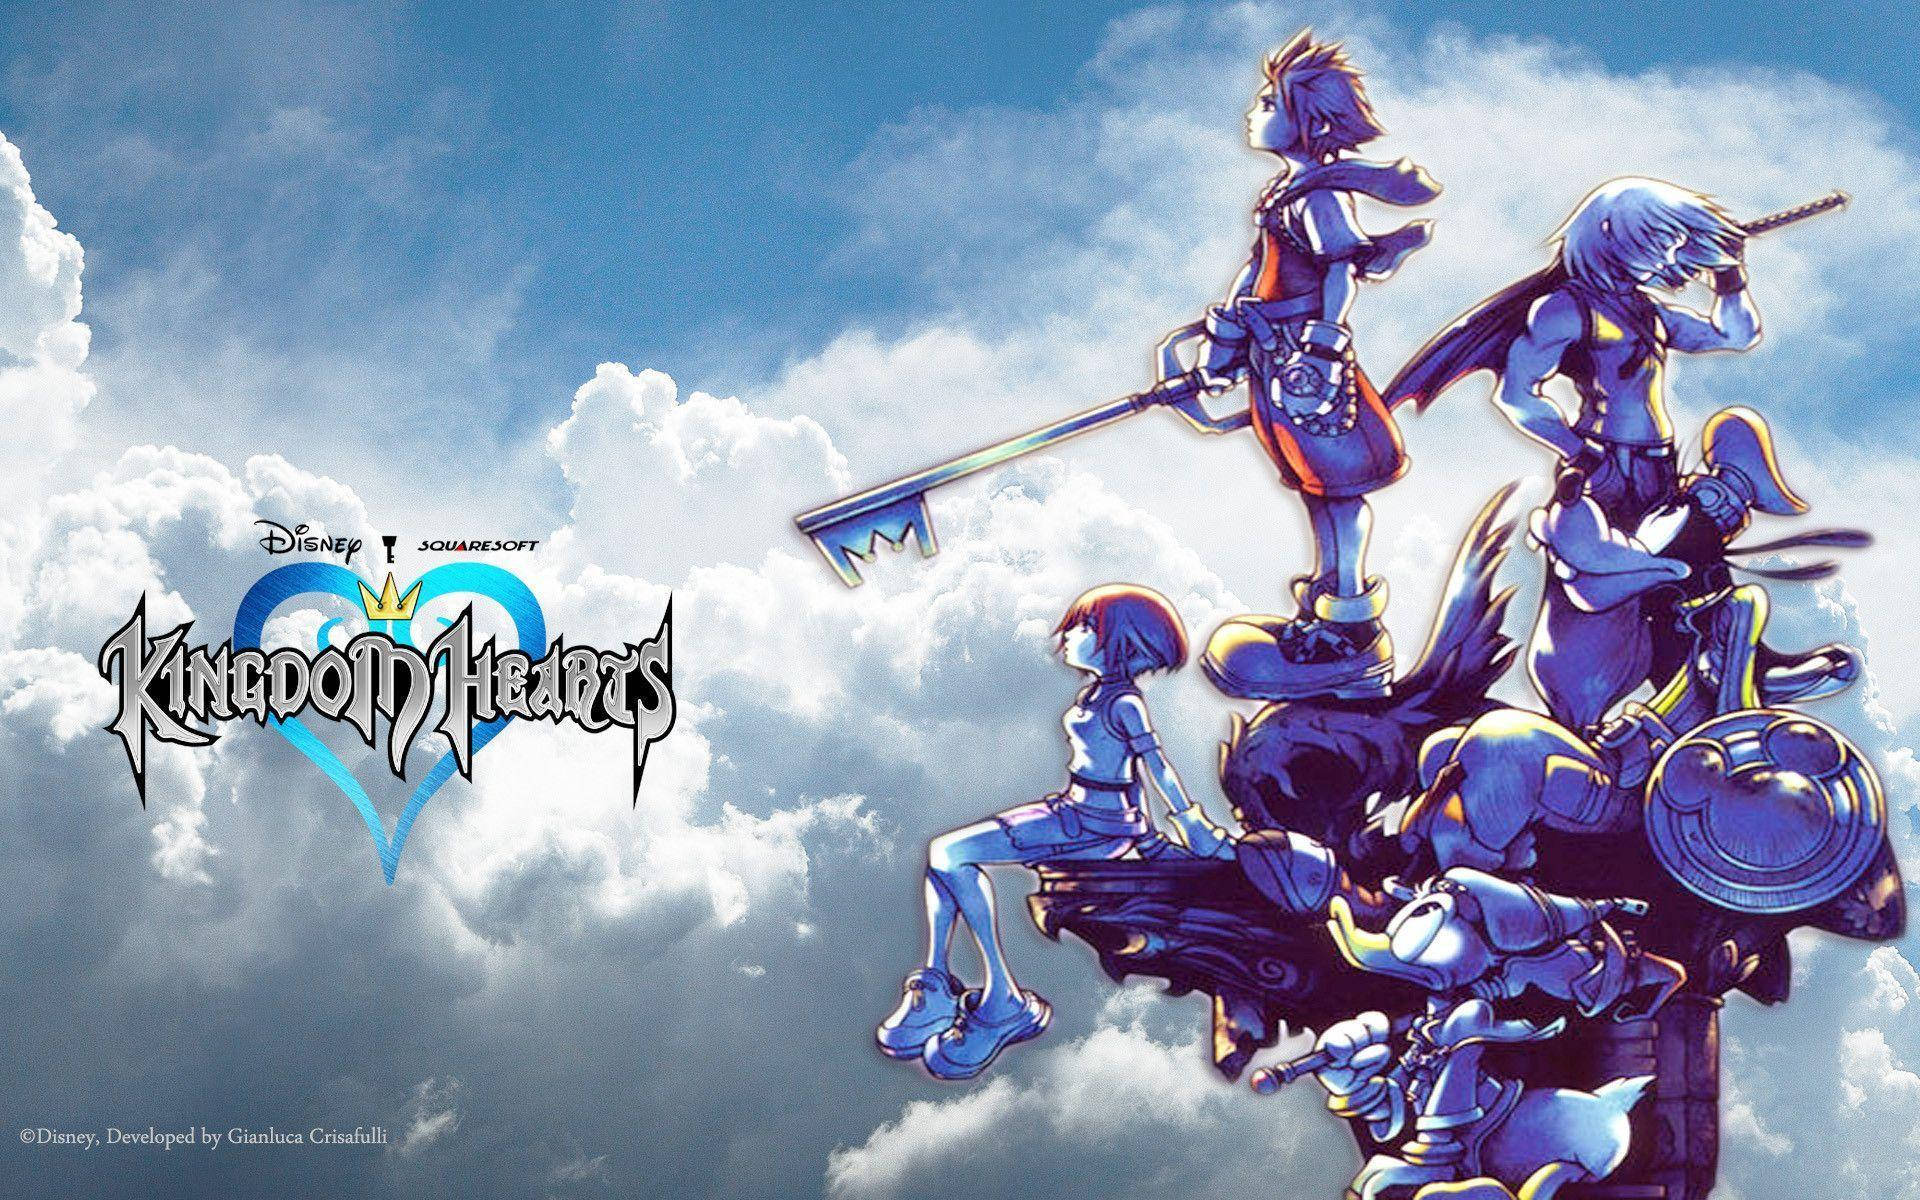 Top 999+ Kingdom Hearts Wallpaper Full HD, 4K✅Free to Use